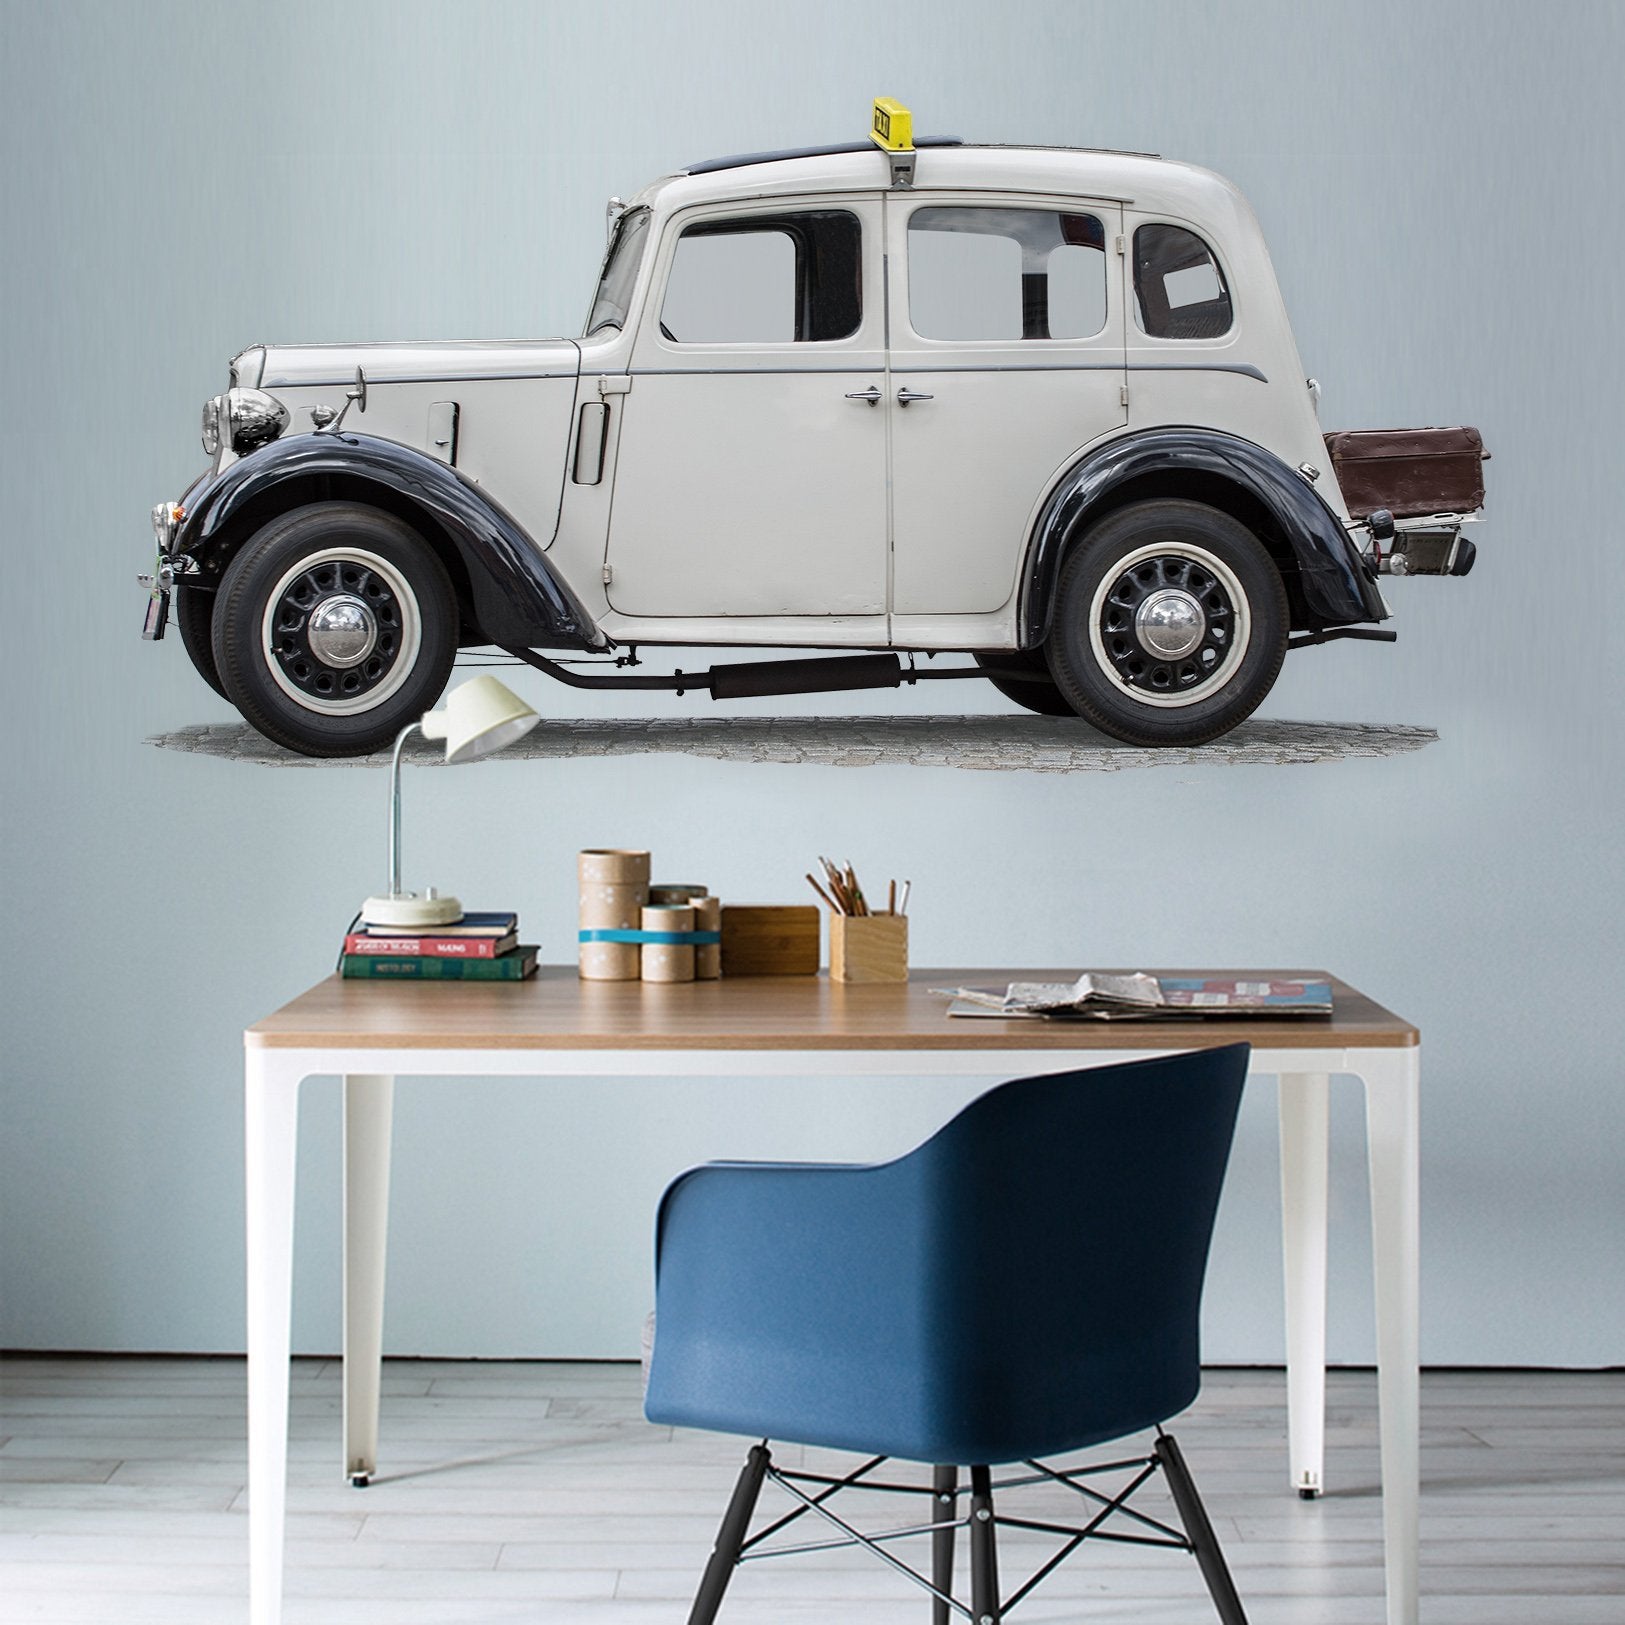 3D Austin 0122 Vehicles Wallpaper AJ Wallpaper 